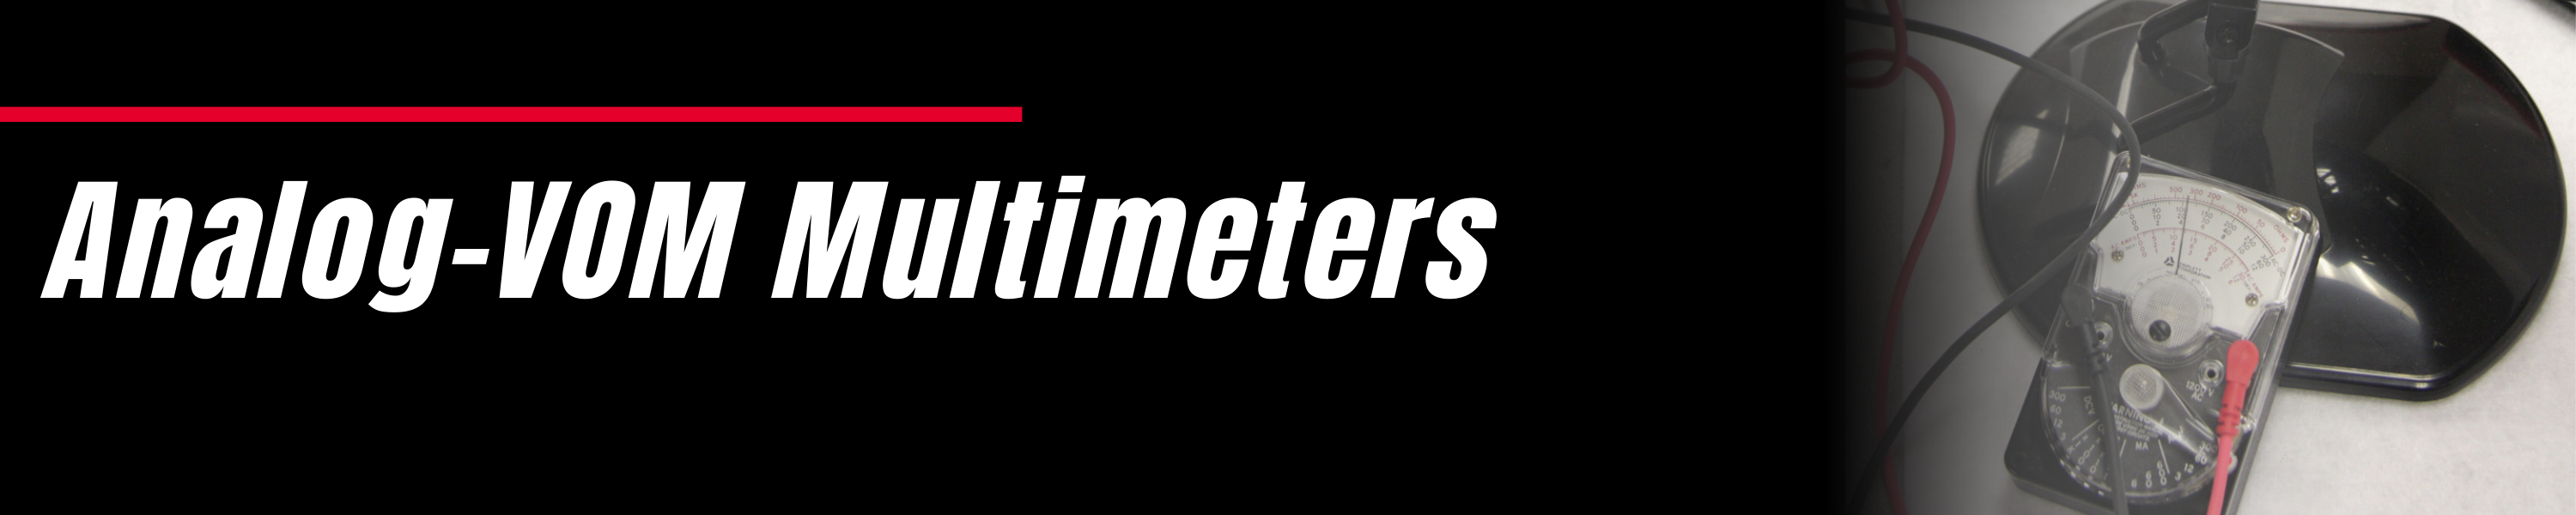 Analog Multimeter | Analog Voltmeters | VOM Meter — Triplett Test